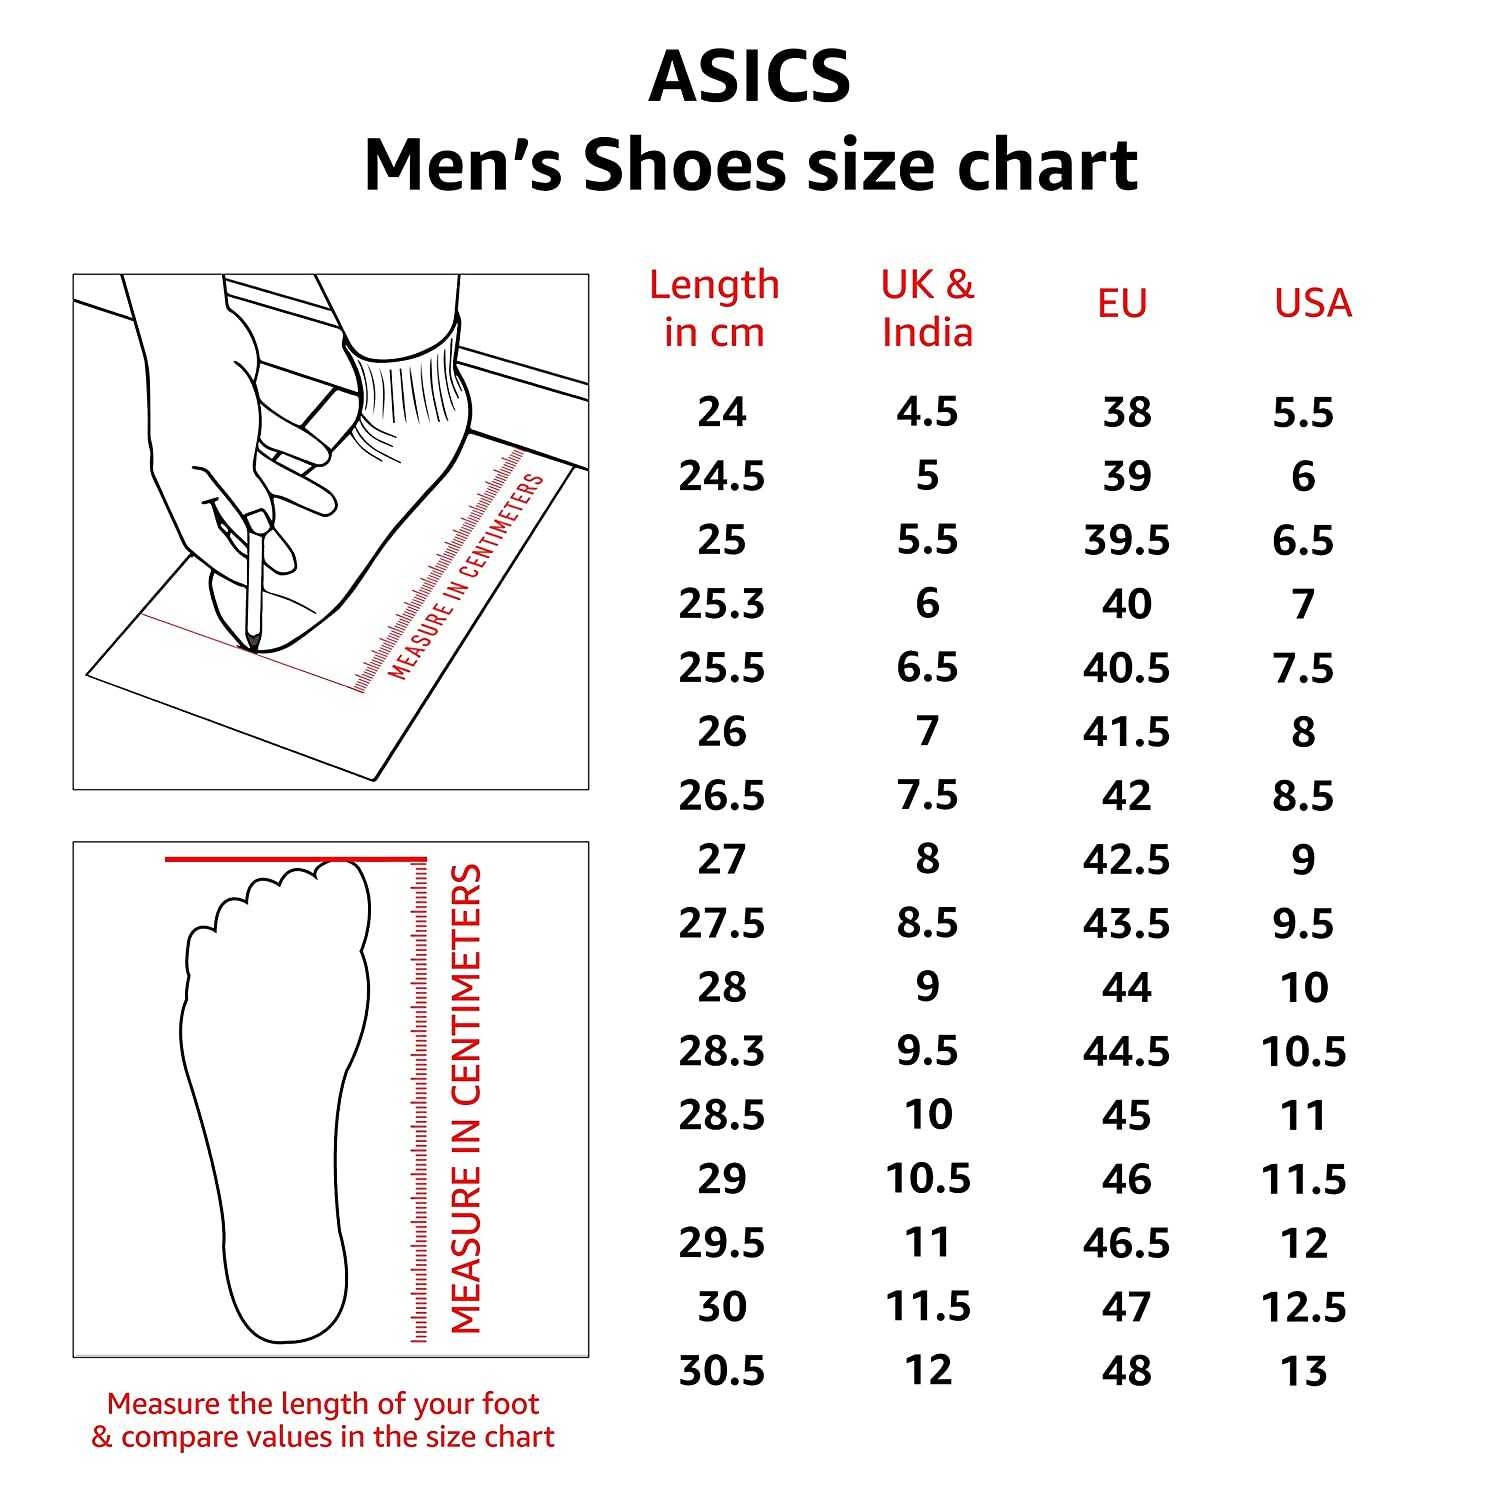 Размерная сетка асикс. ASICS кроссовки Размерная сетка. Размерная сетка обуви асикс мужские кроссовки. Таблица размеров обуви асикс. ASICS 10 размер.